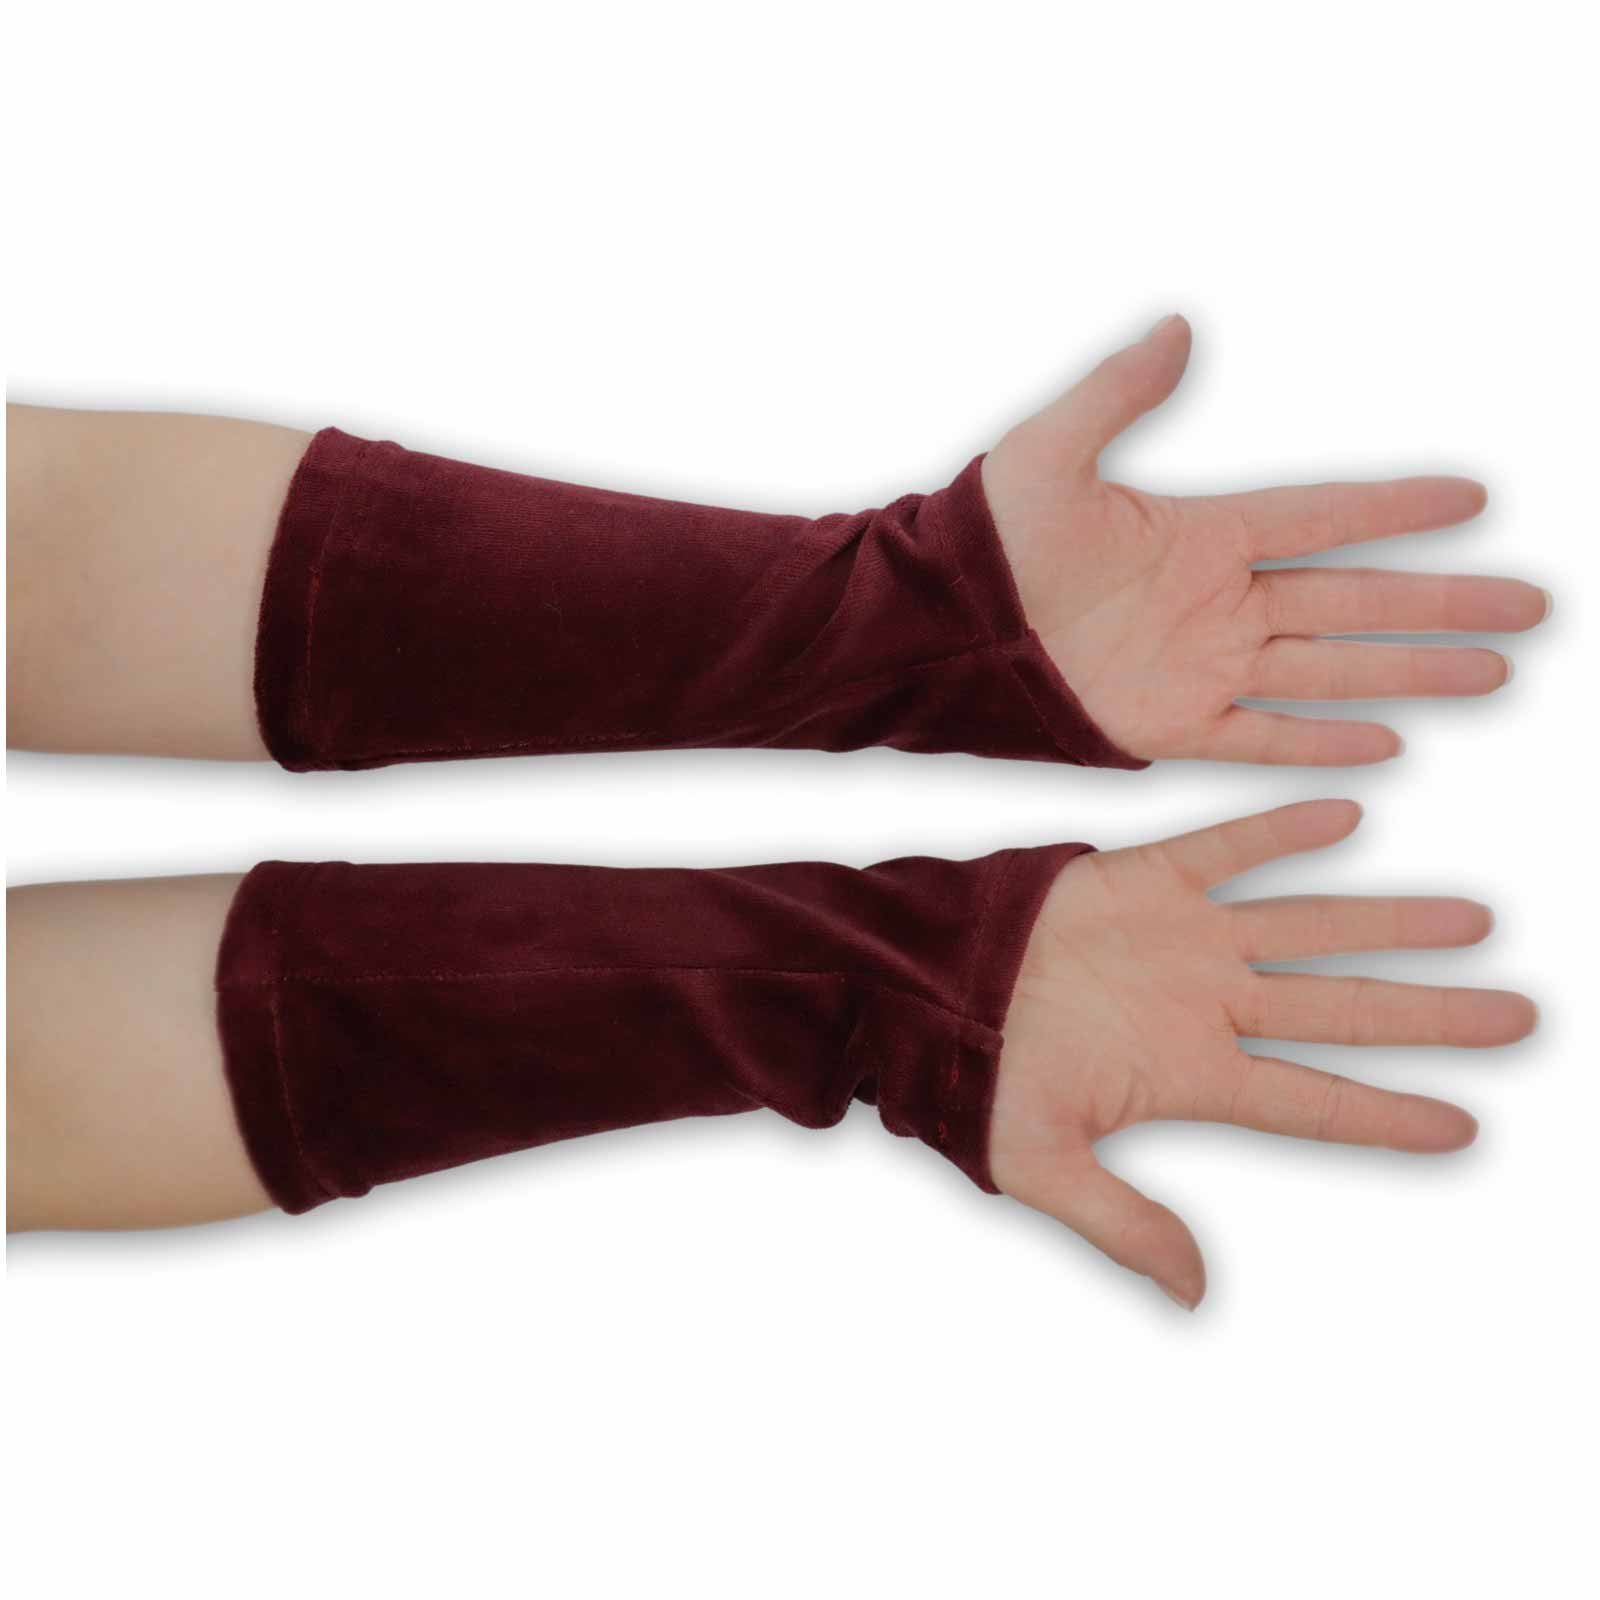 UND Handwärmer MAGIE Glöckchen + Handschuhe KUNST Armstulpen Armstulpen Stulpen Damen Samt Bordeaux Boho